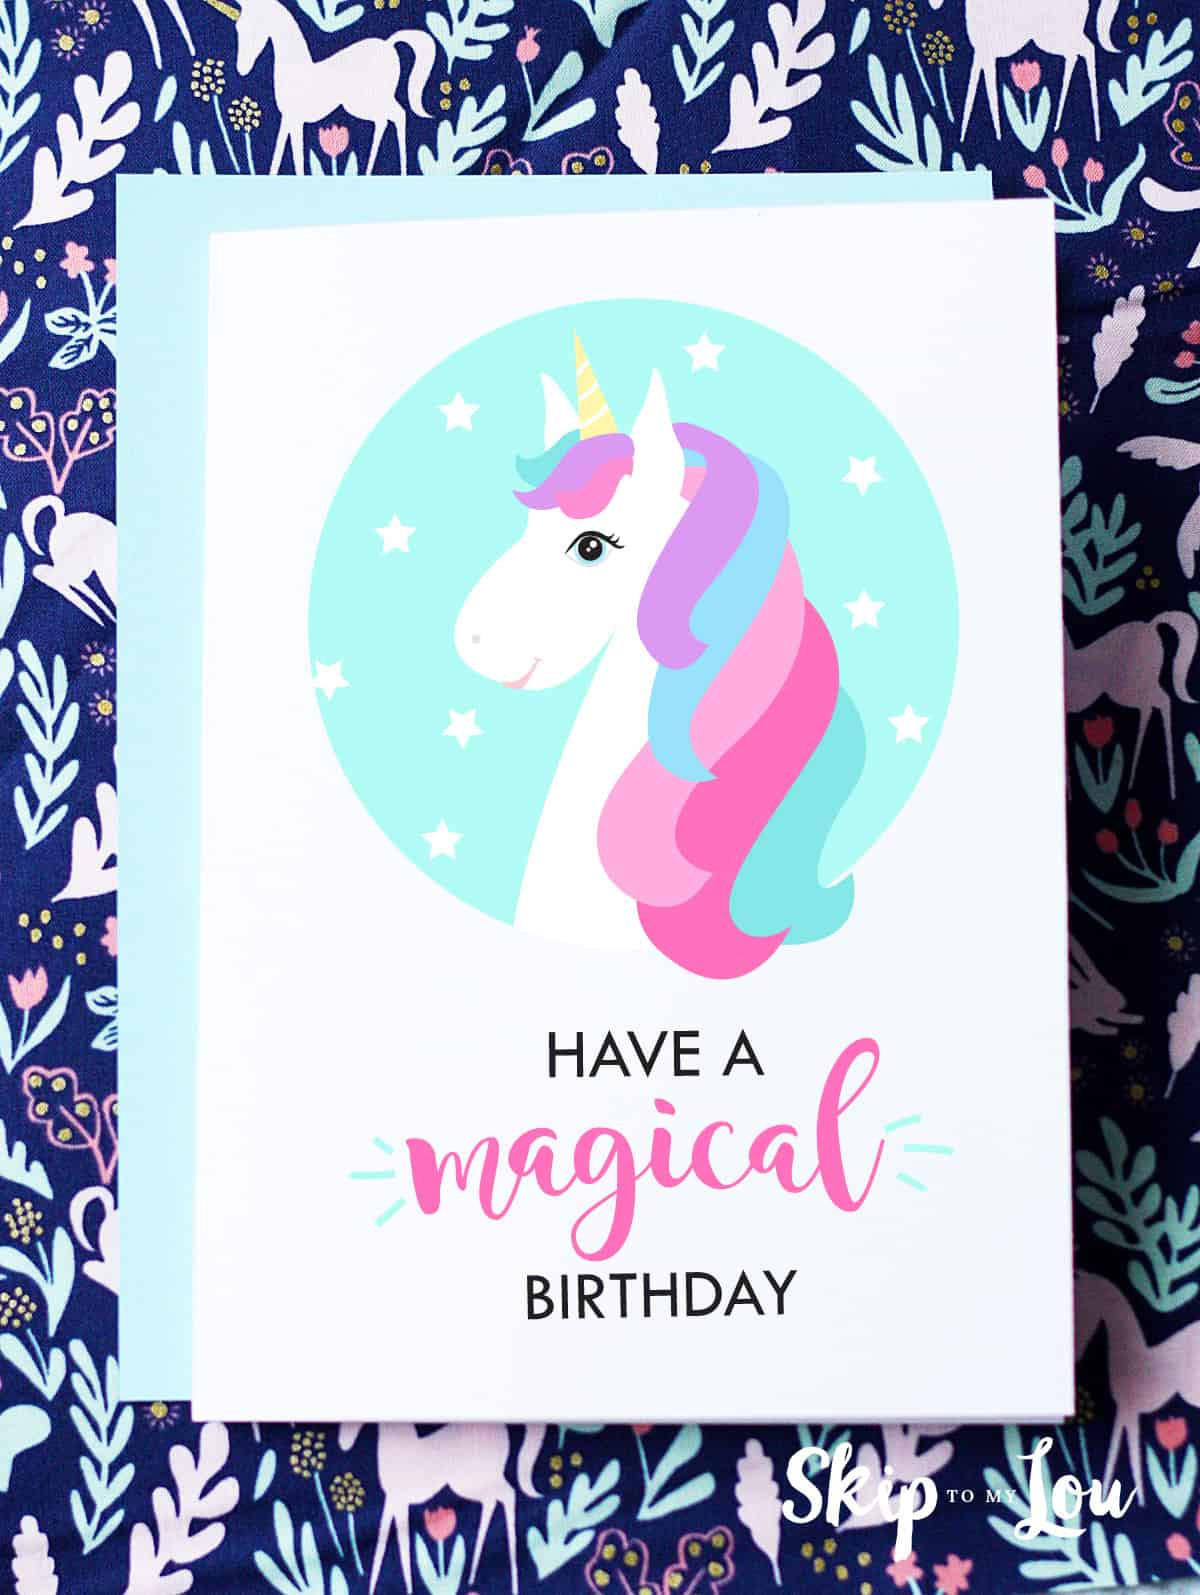 Happy Birthday Cards To Print
 Free Printable Birthday Cards